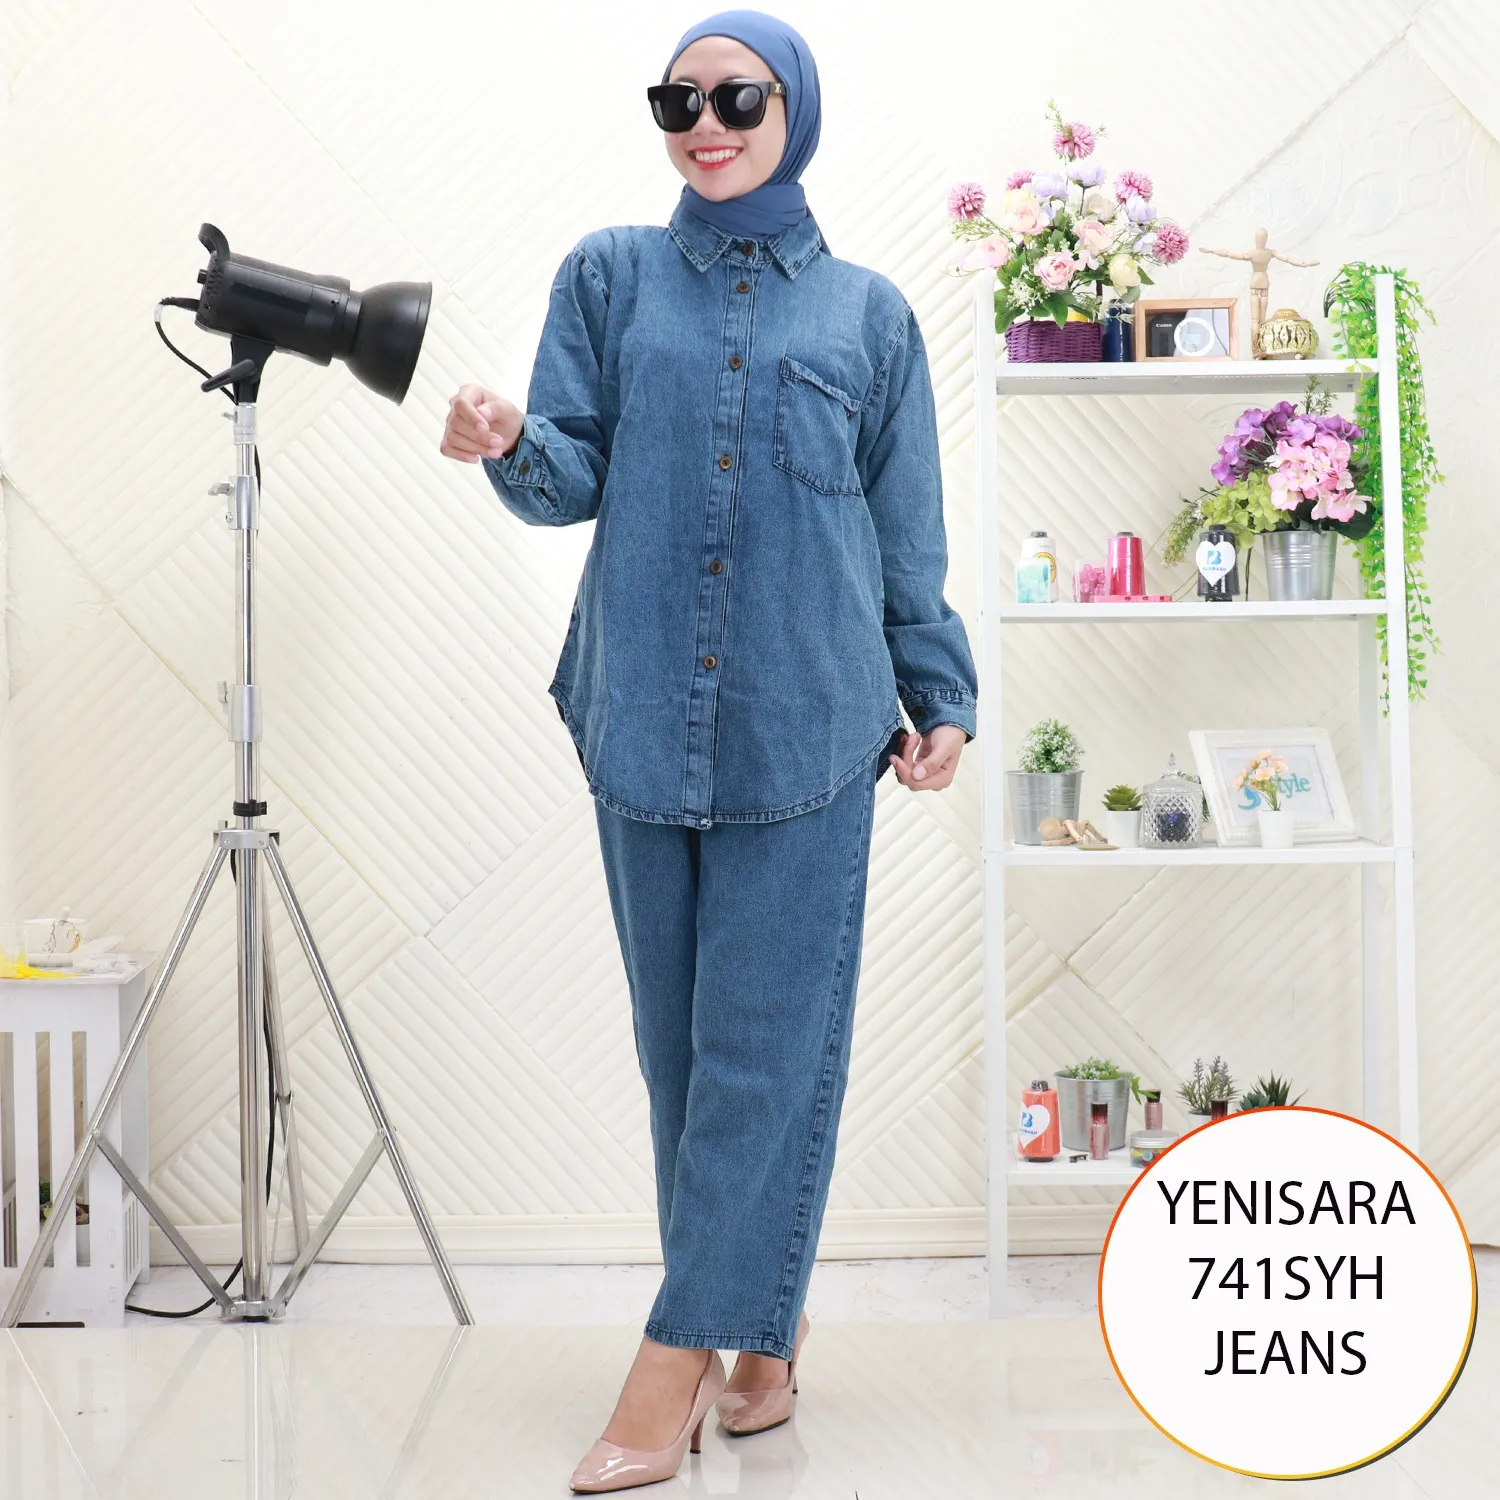 Yenisara One Set Jeans Kemeja Saku Depan  Full Kancing 741SYH Jeans - bajubaru.id, Belanja Online di bajubaru.id saja 